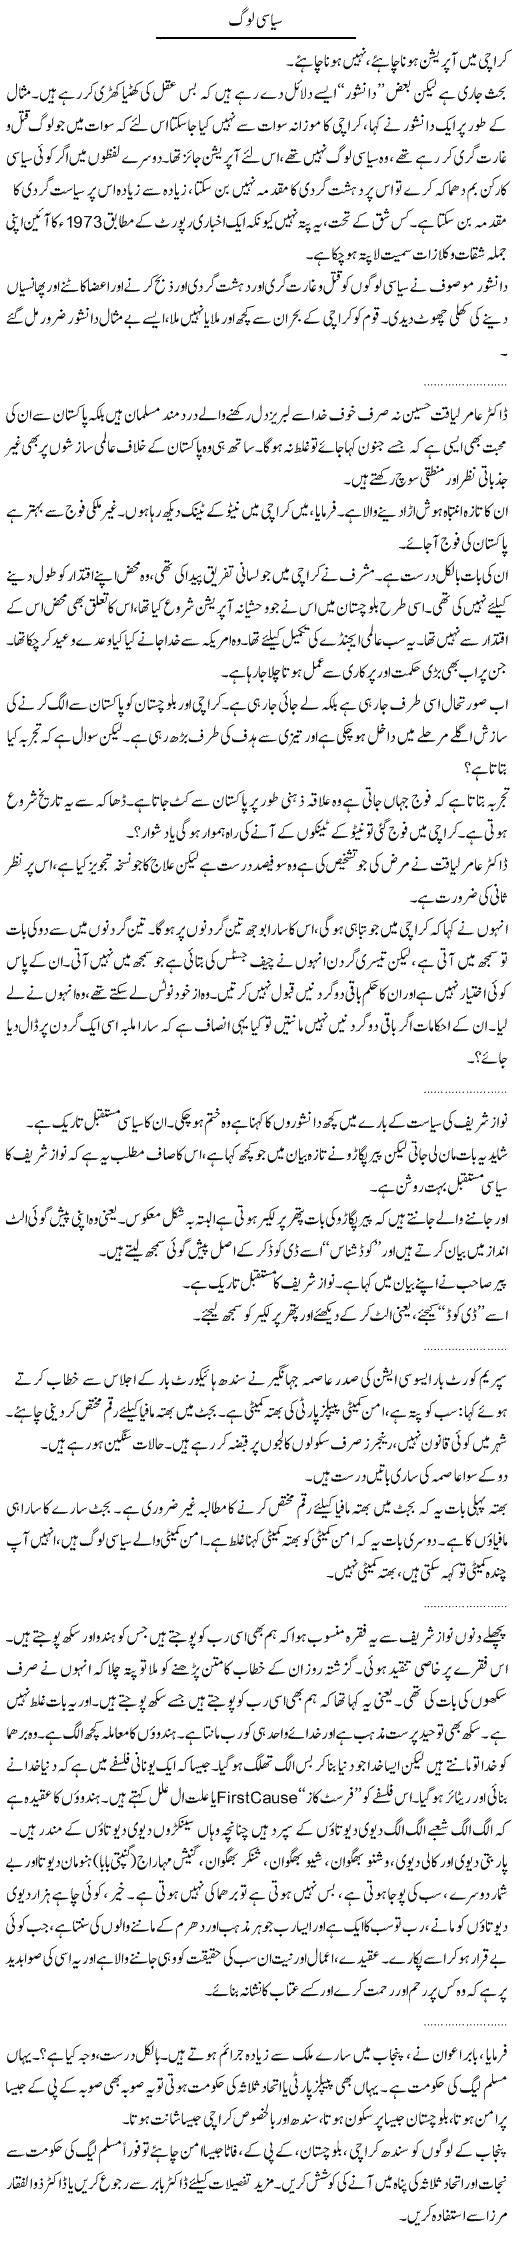 Political People Express Column Abdullah Tariq 24 August 2011